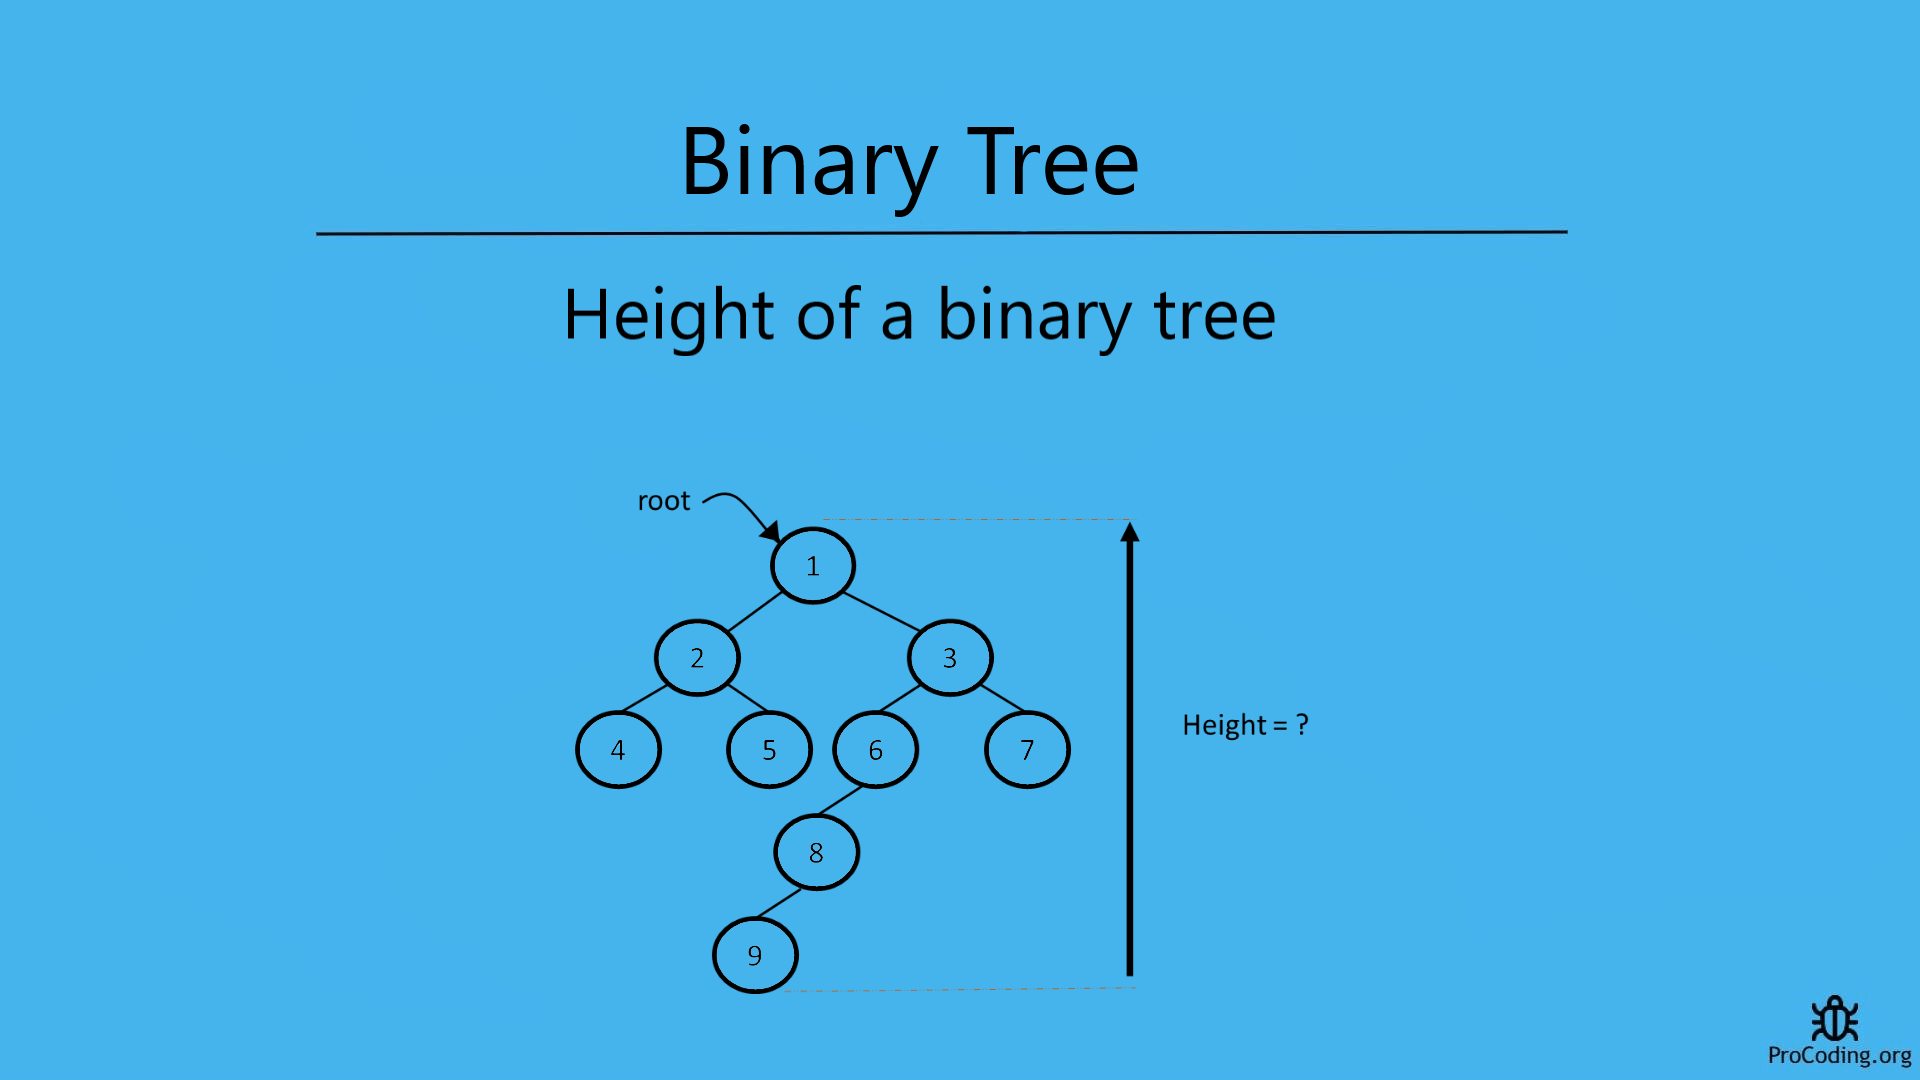 Height of a binary tree